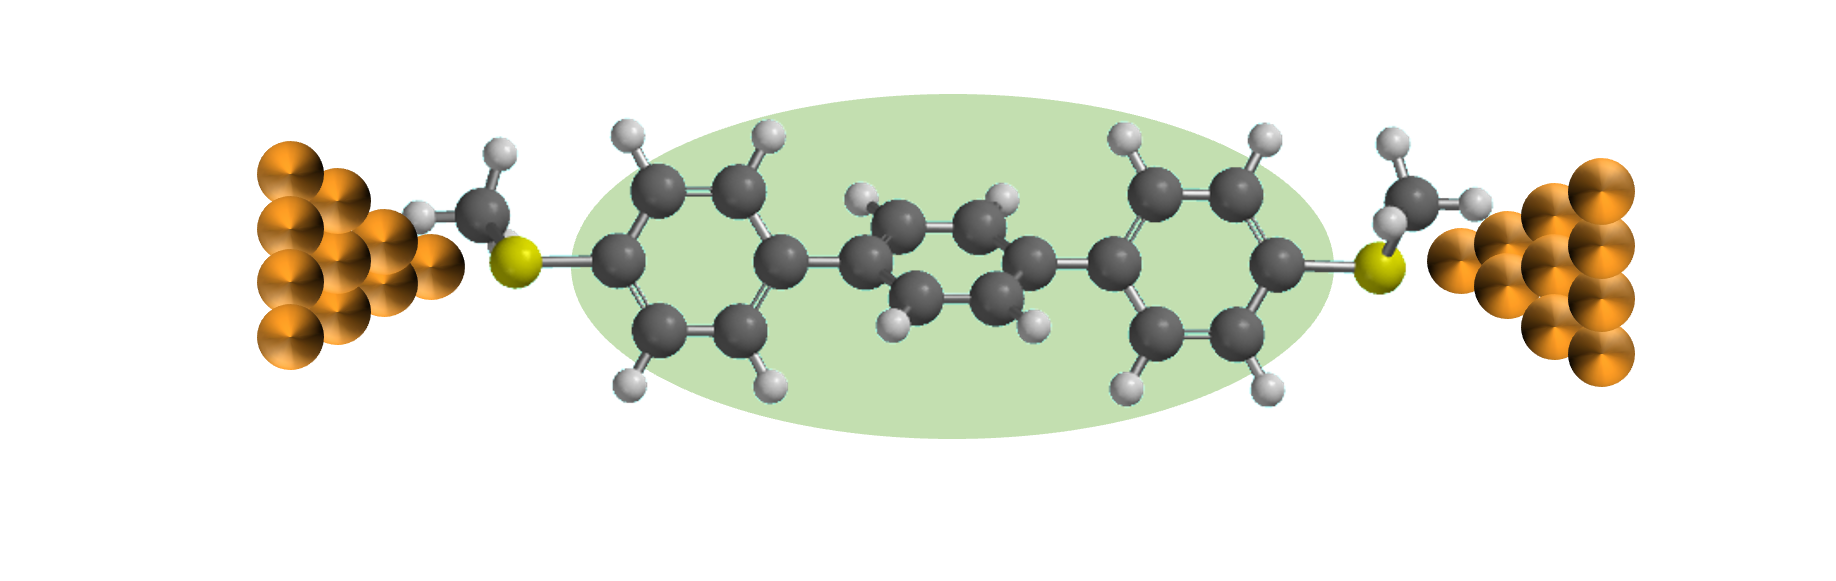 Schematic of a molecular junction for single-molecule electronics.&nbsp;